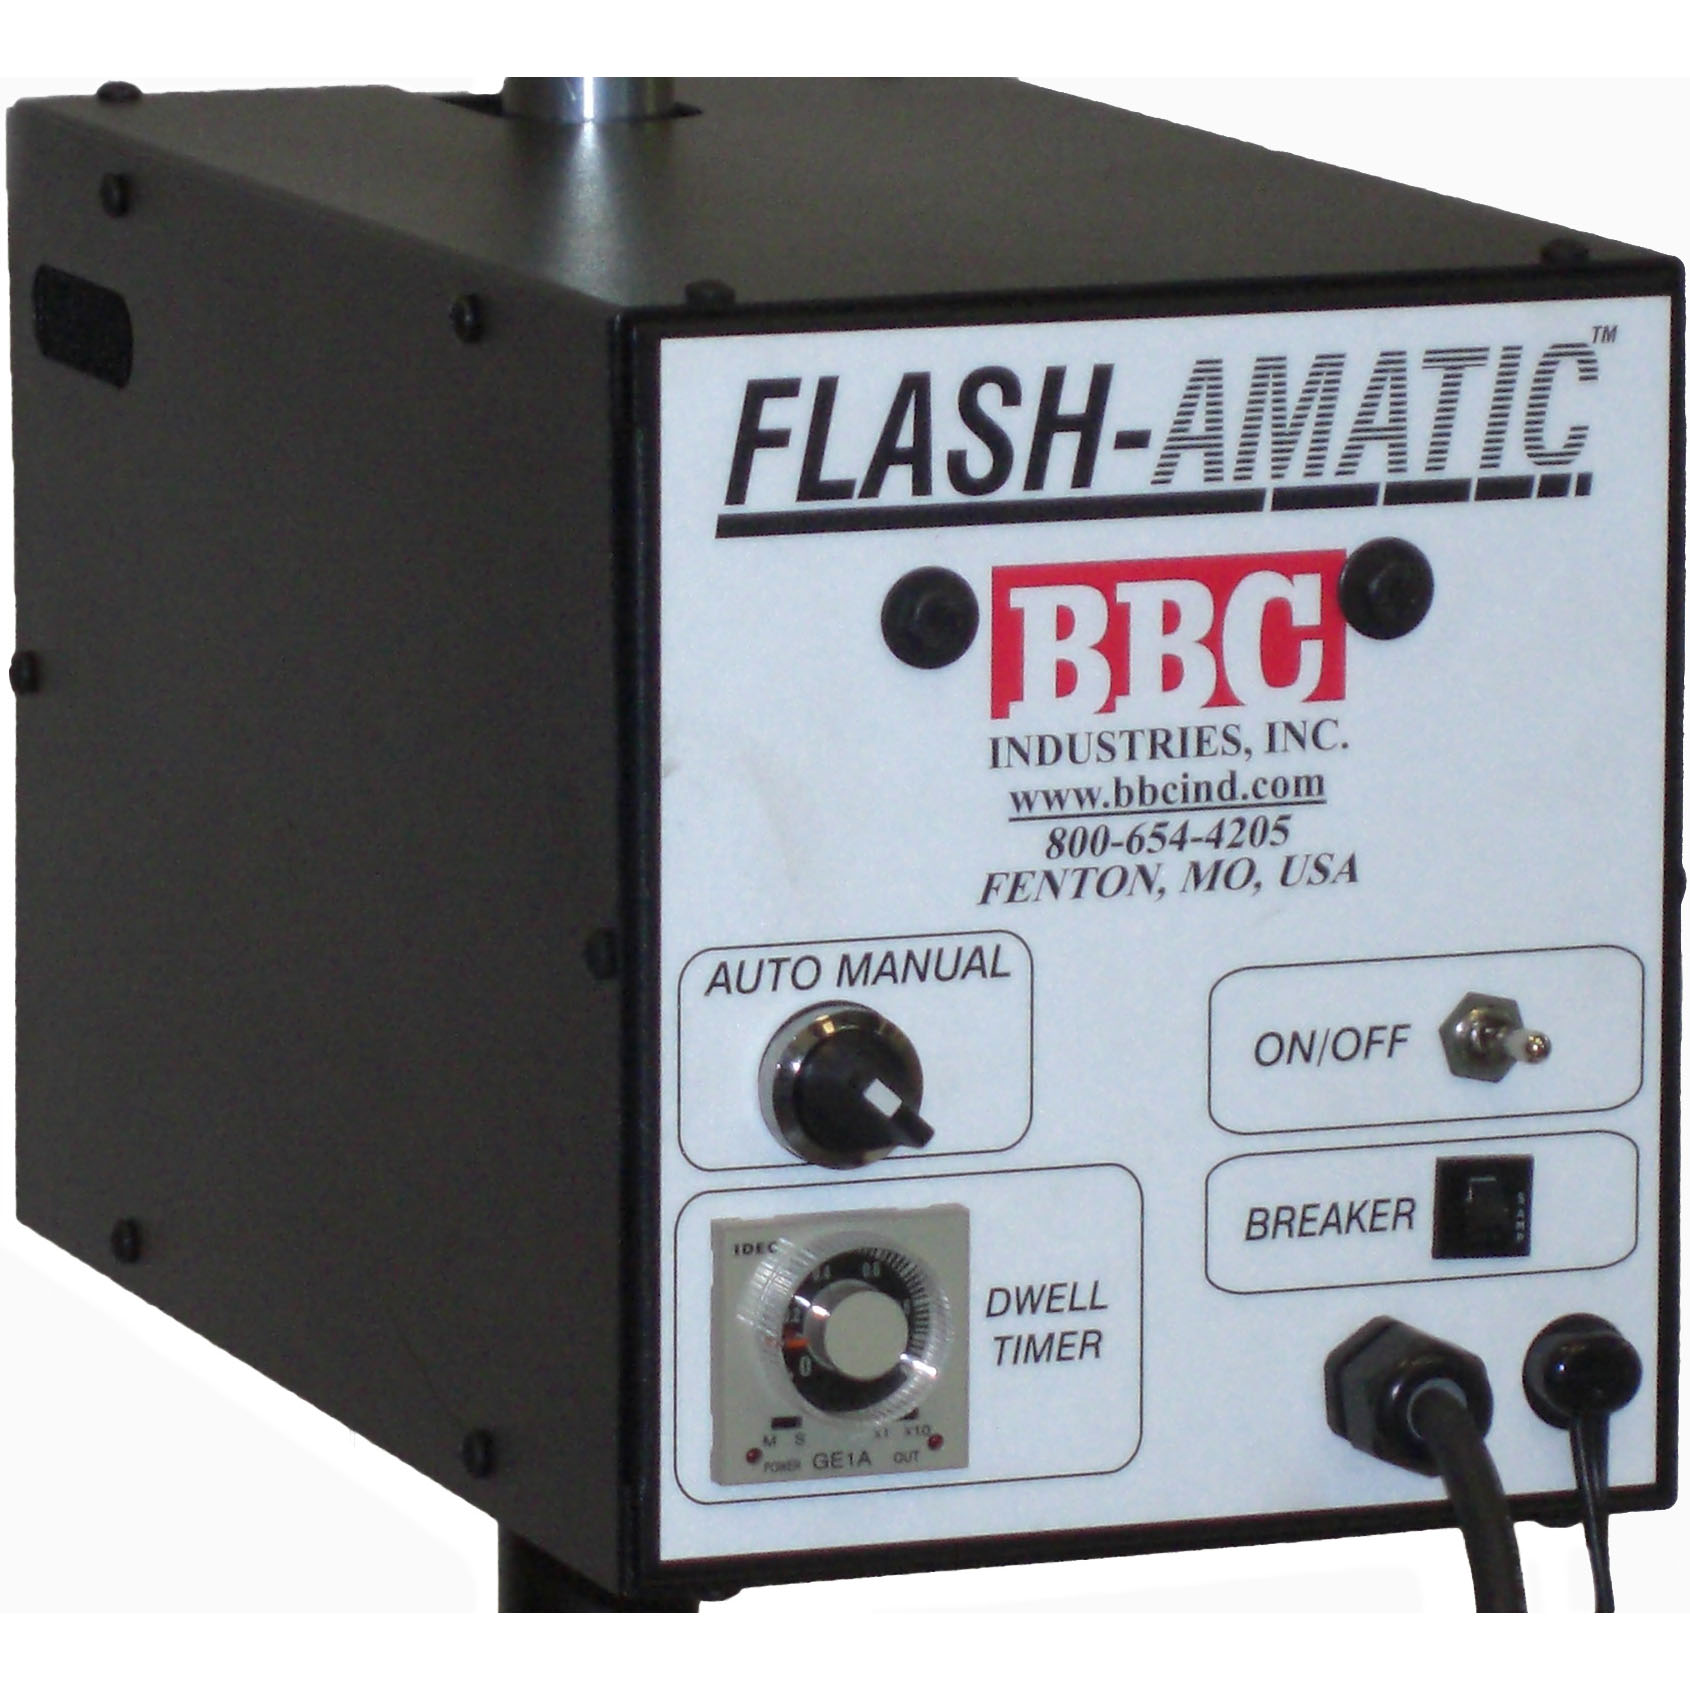 BBC Industries, Inc. - Afford-A-Flash Heater 16x16 #BBC-LC1600